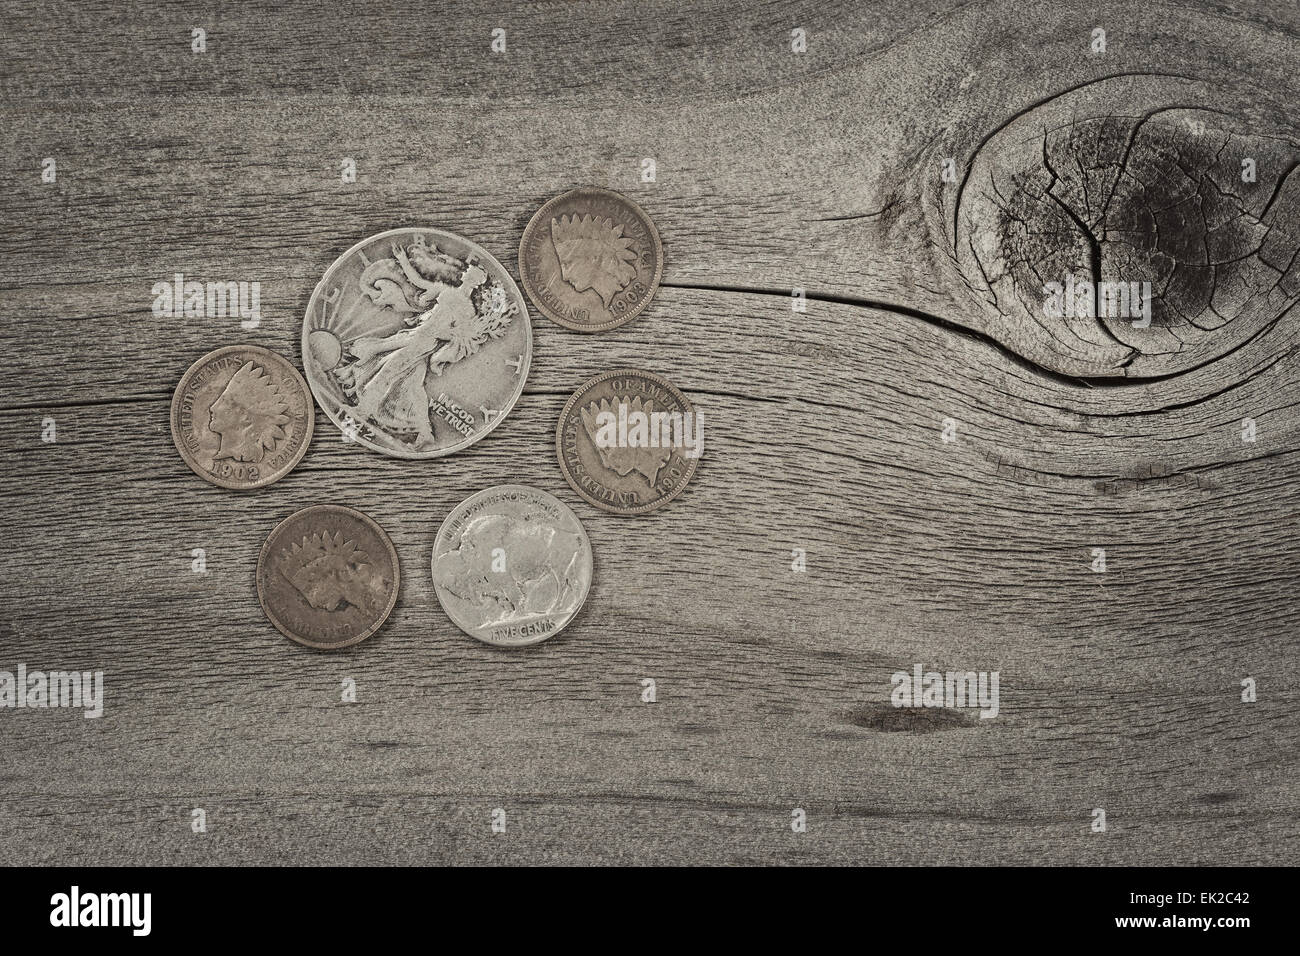 Monedas coleccion fotografías e imágenes de alta resolución - Alamy